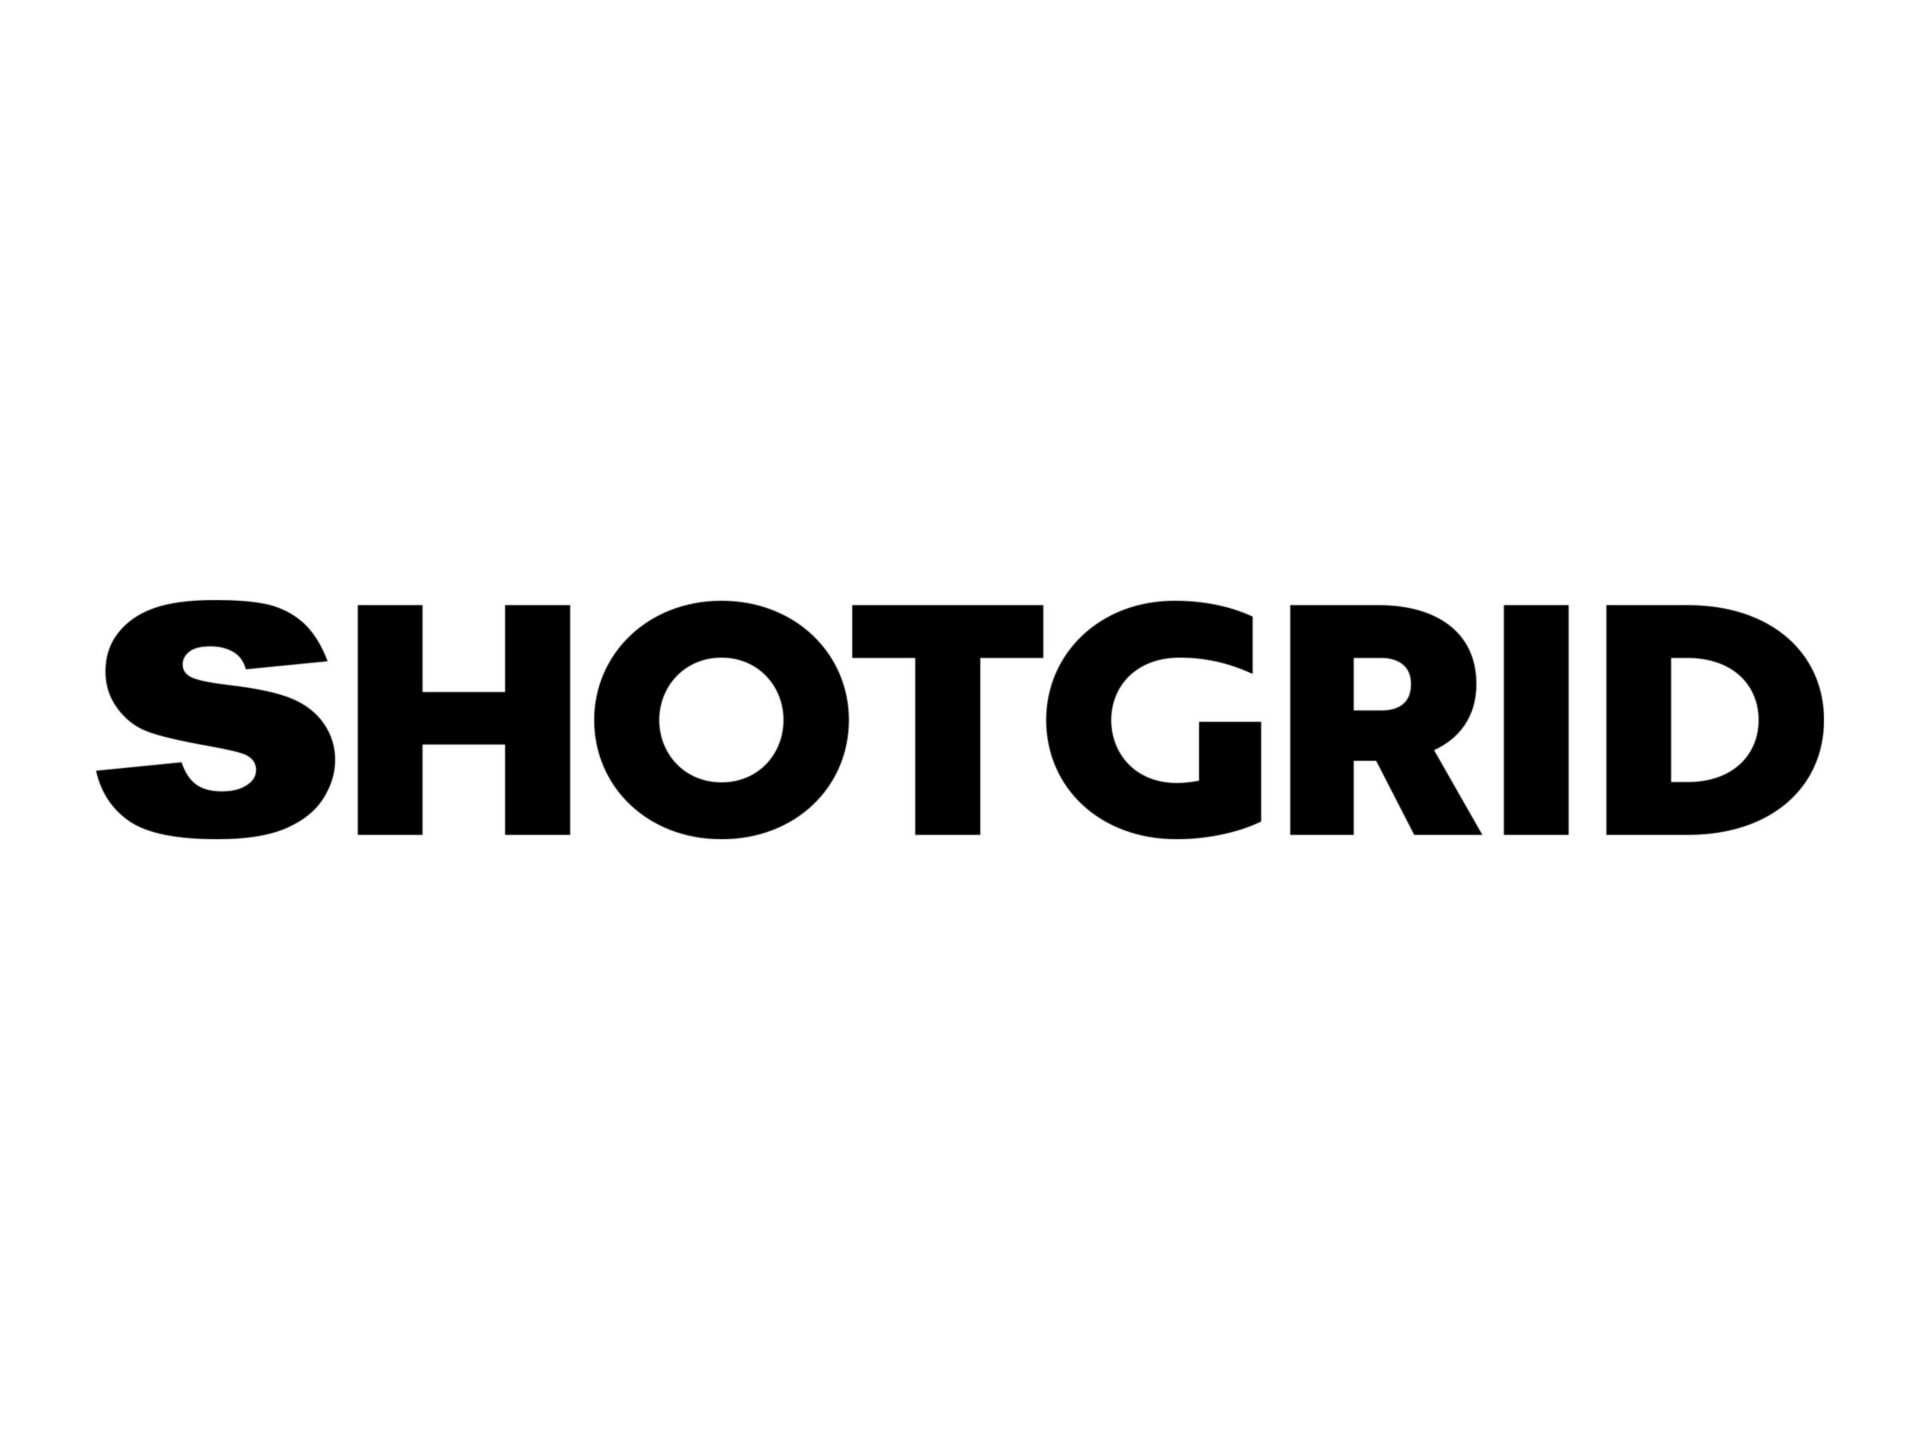 Autodesk ShotGrid - New Subscription (10 months) - 1 seat